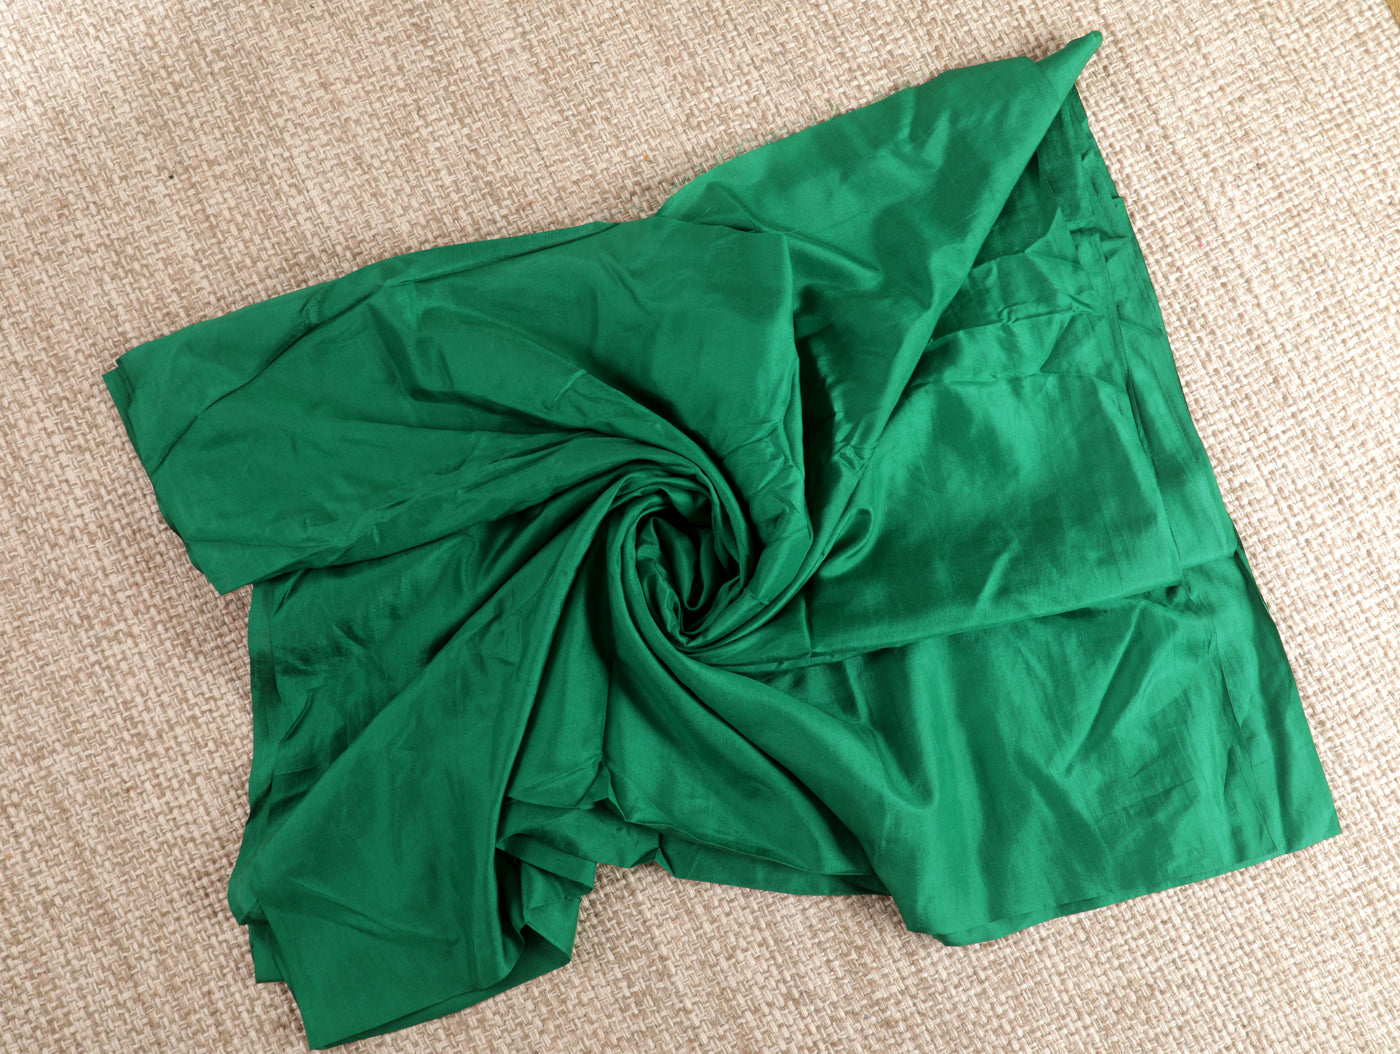 Green Pure Silk Fabric